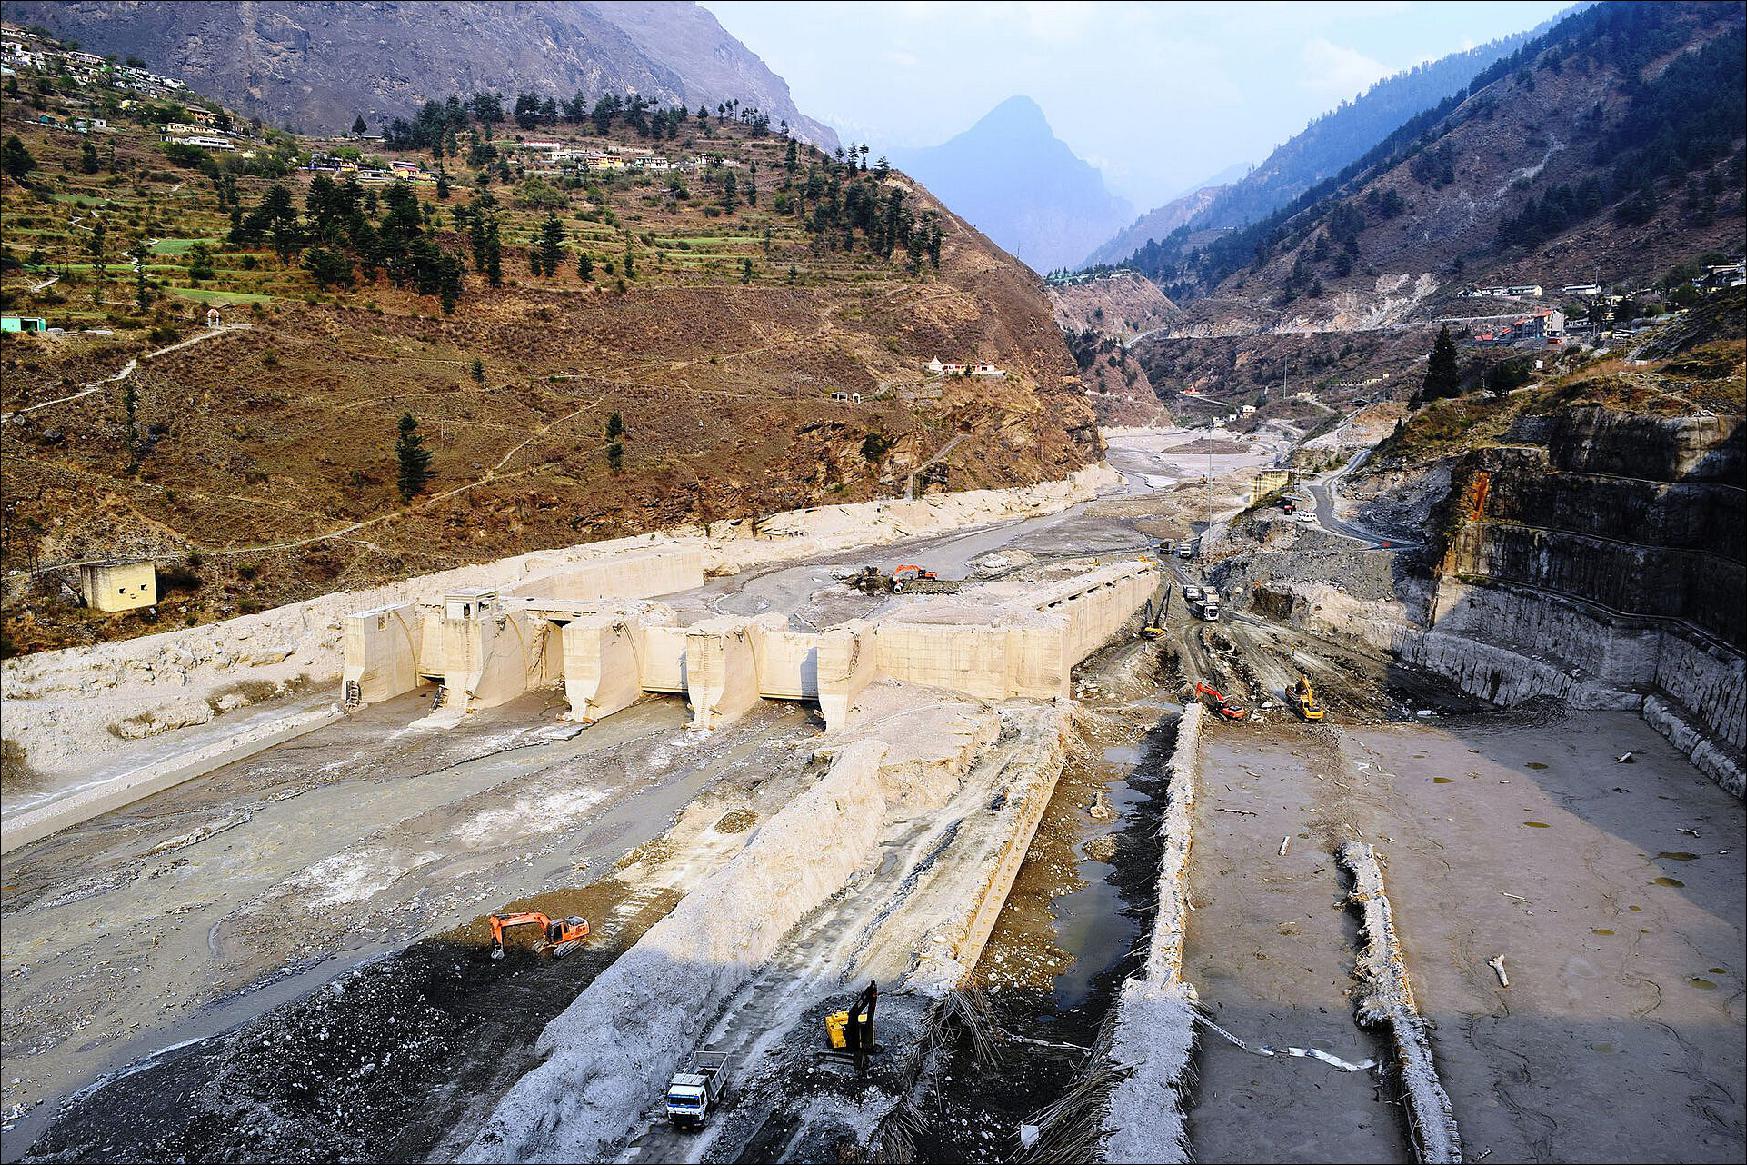 Figure 39: Destroyed Tapovan Vishnugad hydroelectric plant after devastating debris flow on 7 February 2021 (image credit: Irfan Rashid, Department of Geoinformatics, University of Kashmir)